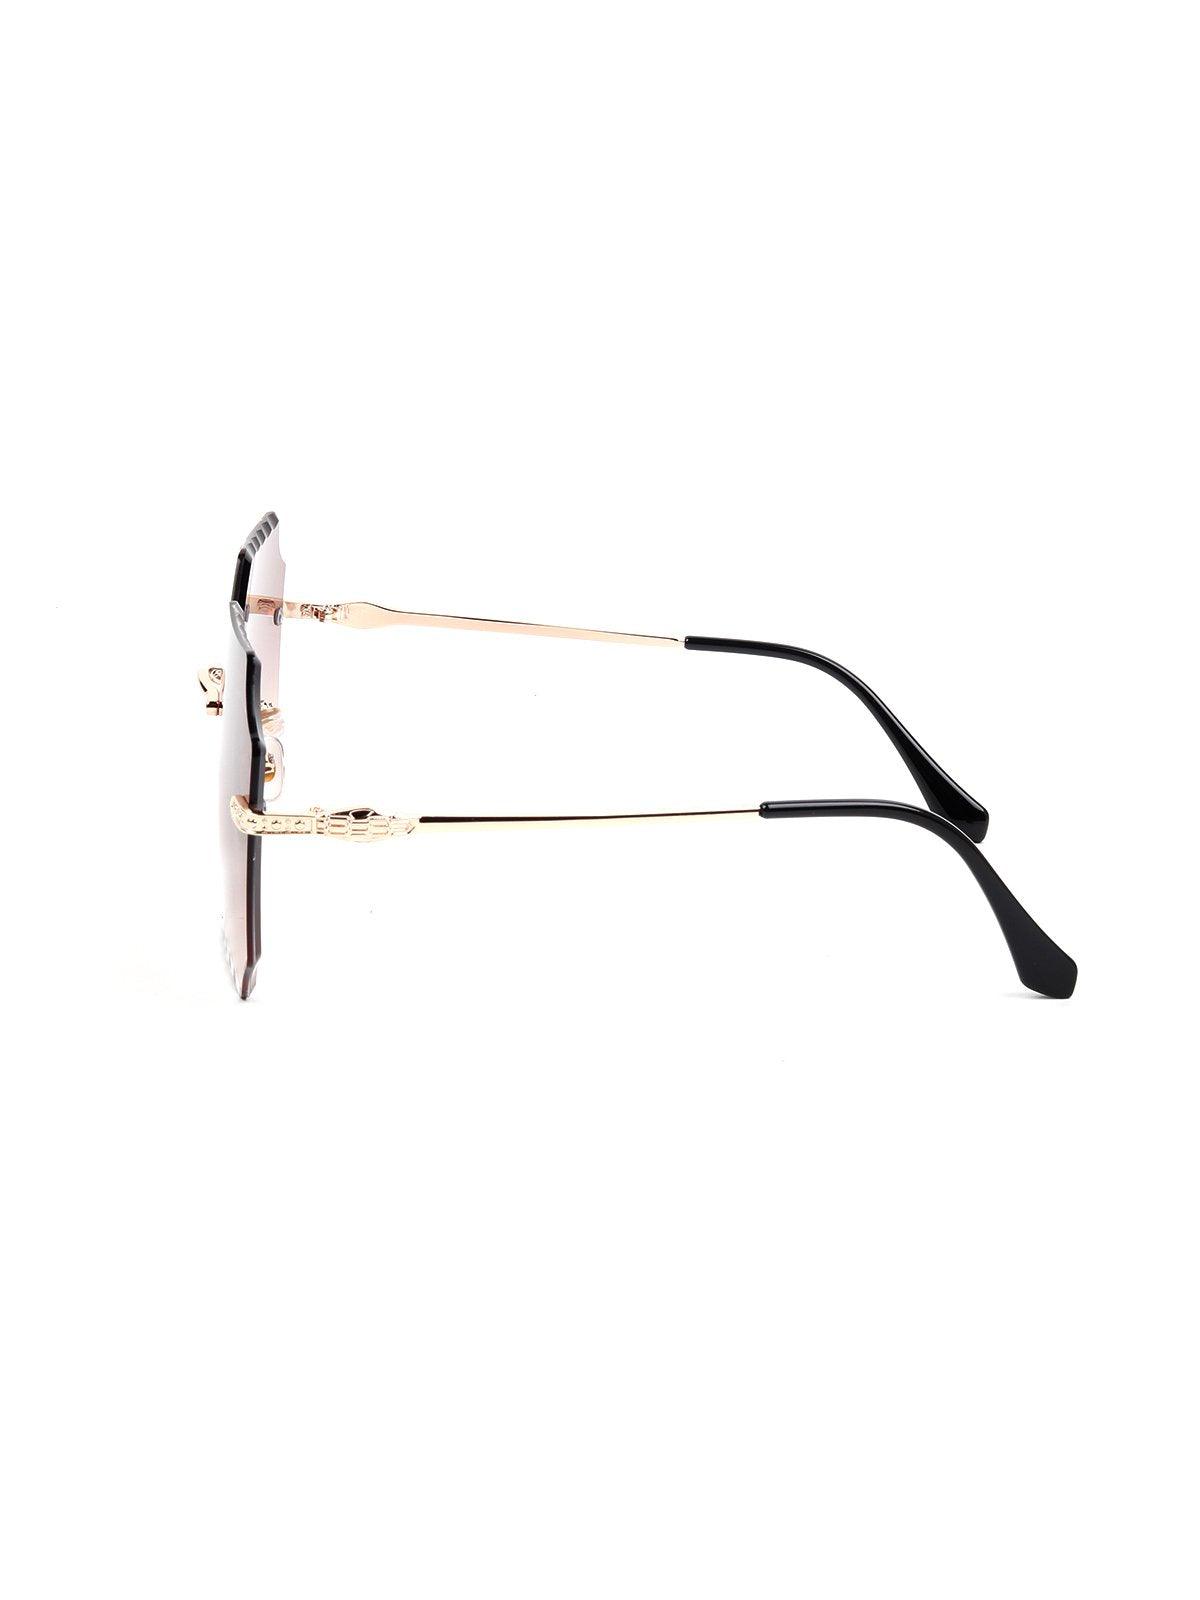 Odette Women Tan High-Index Acrylic Lens Sunglasses